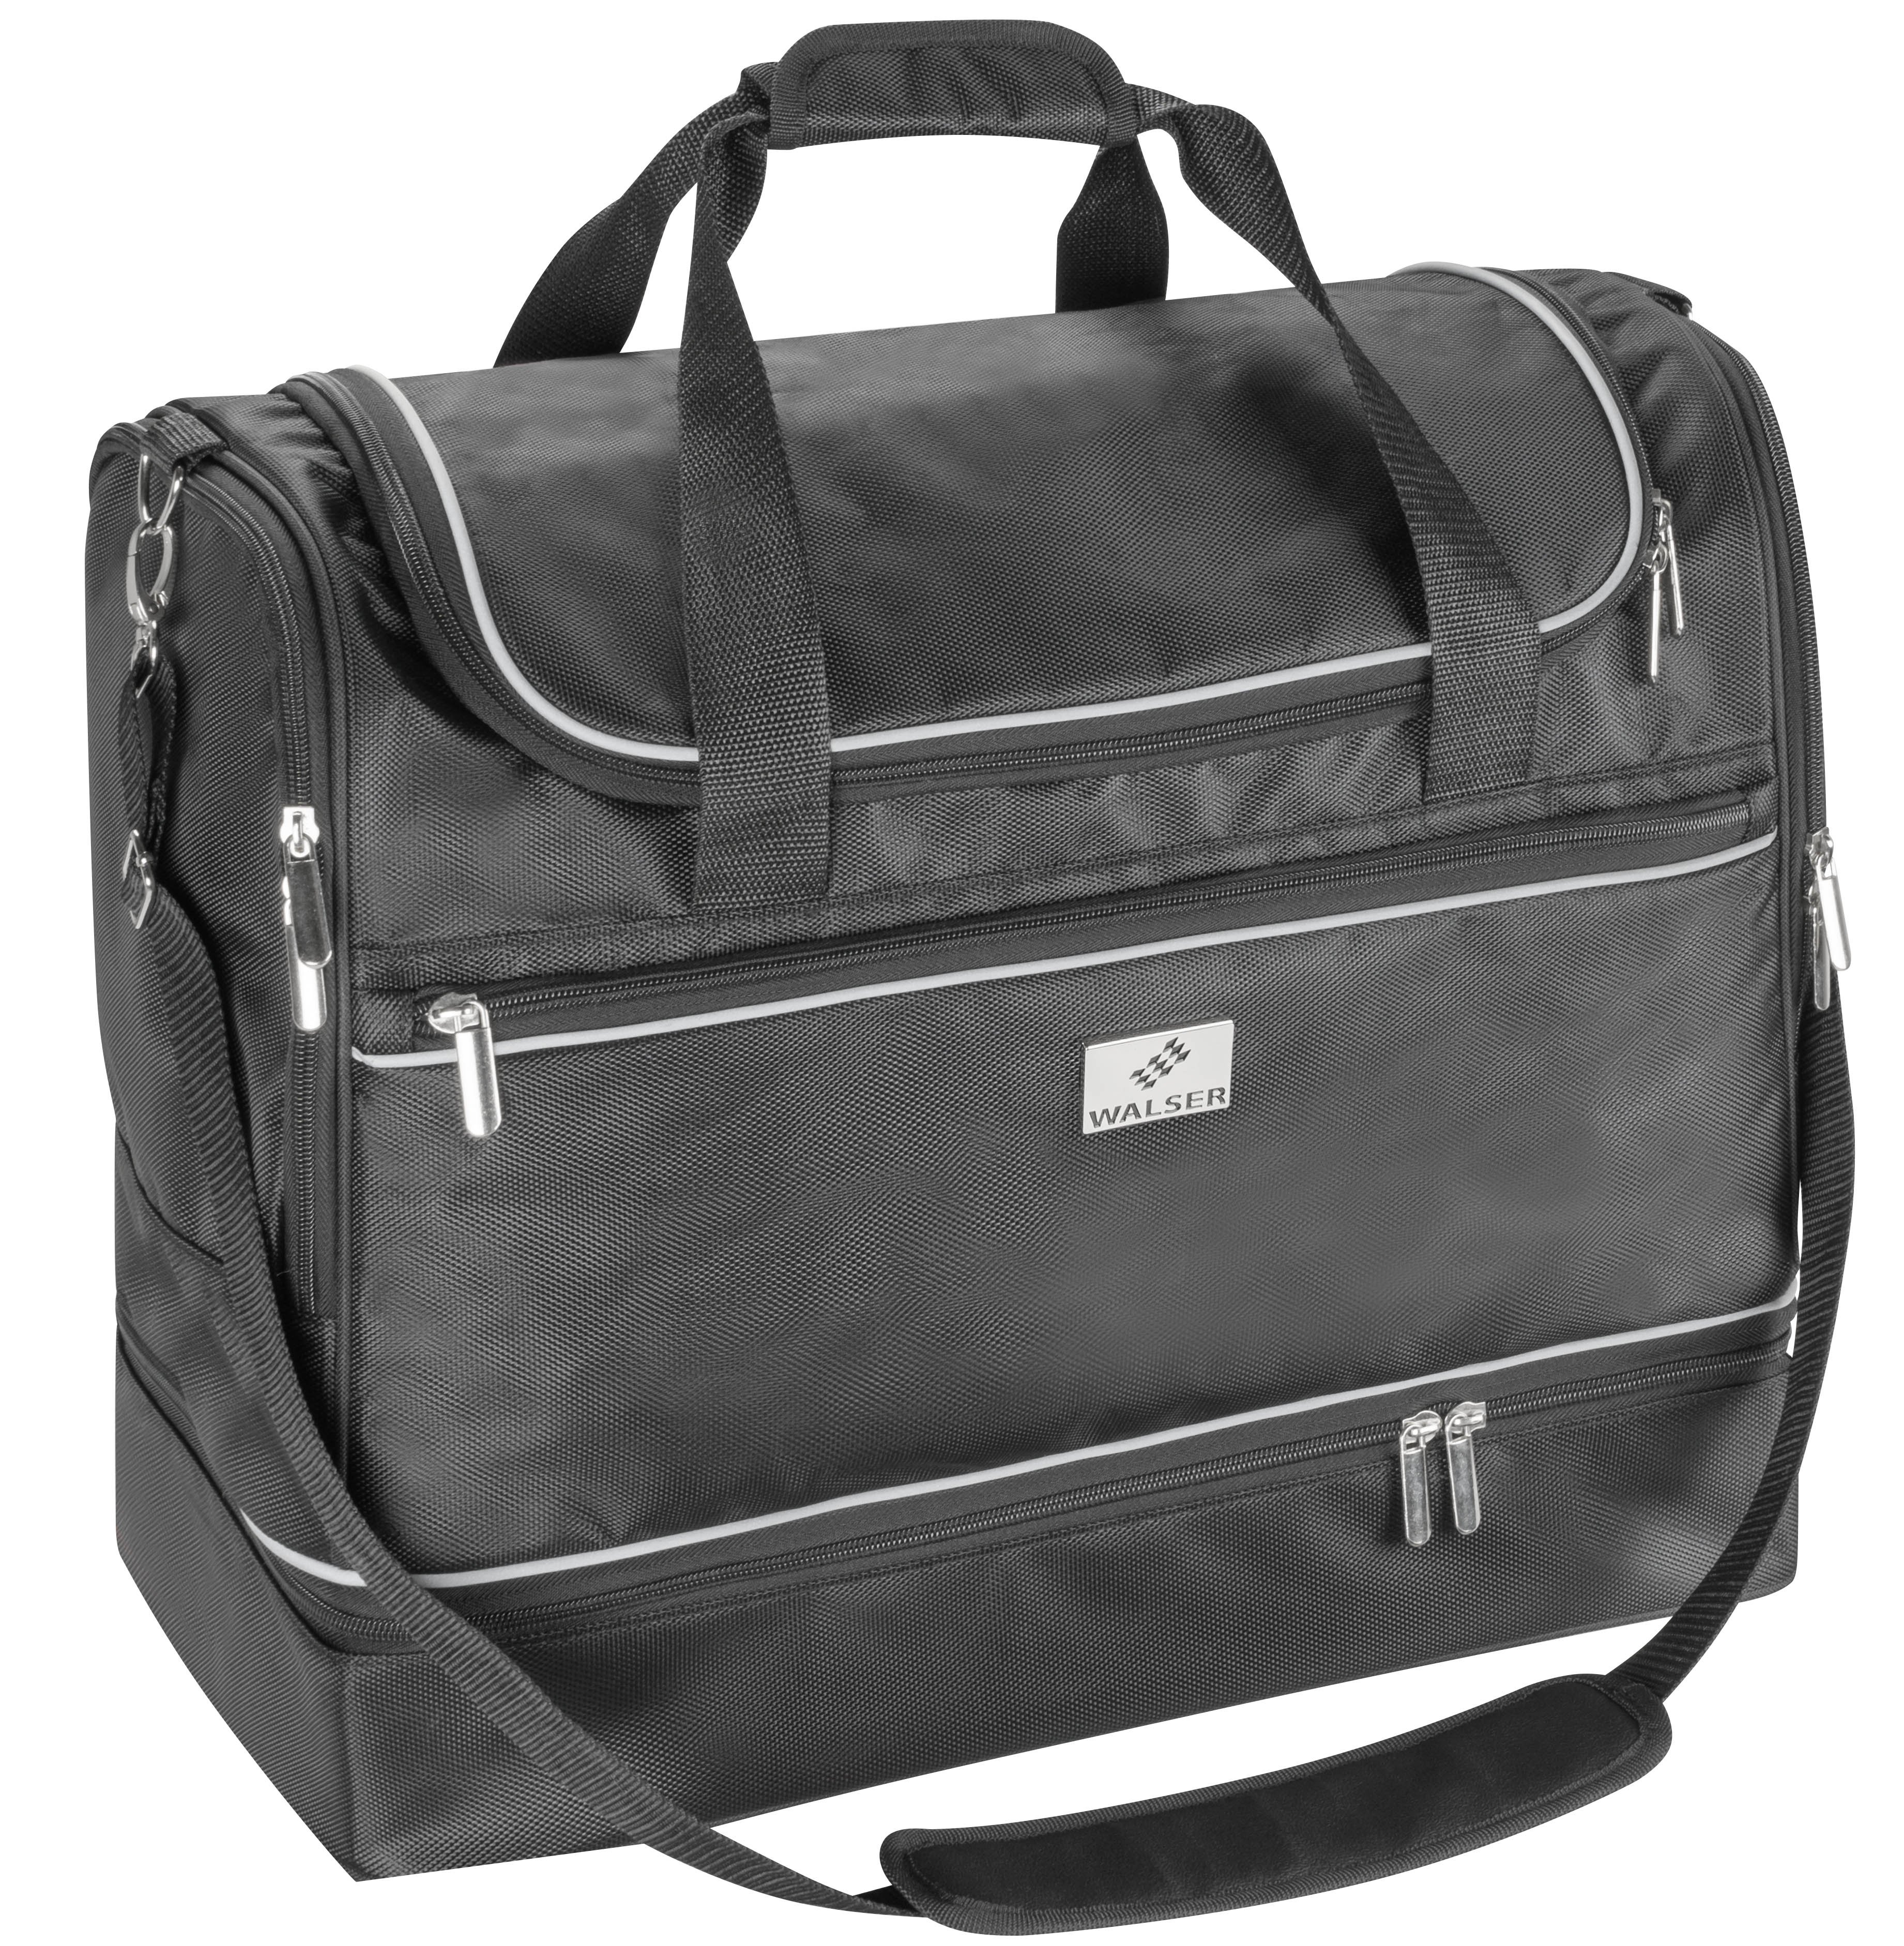 Carbags sports bag 45x30x45cm black